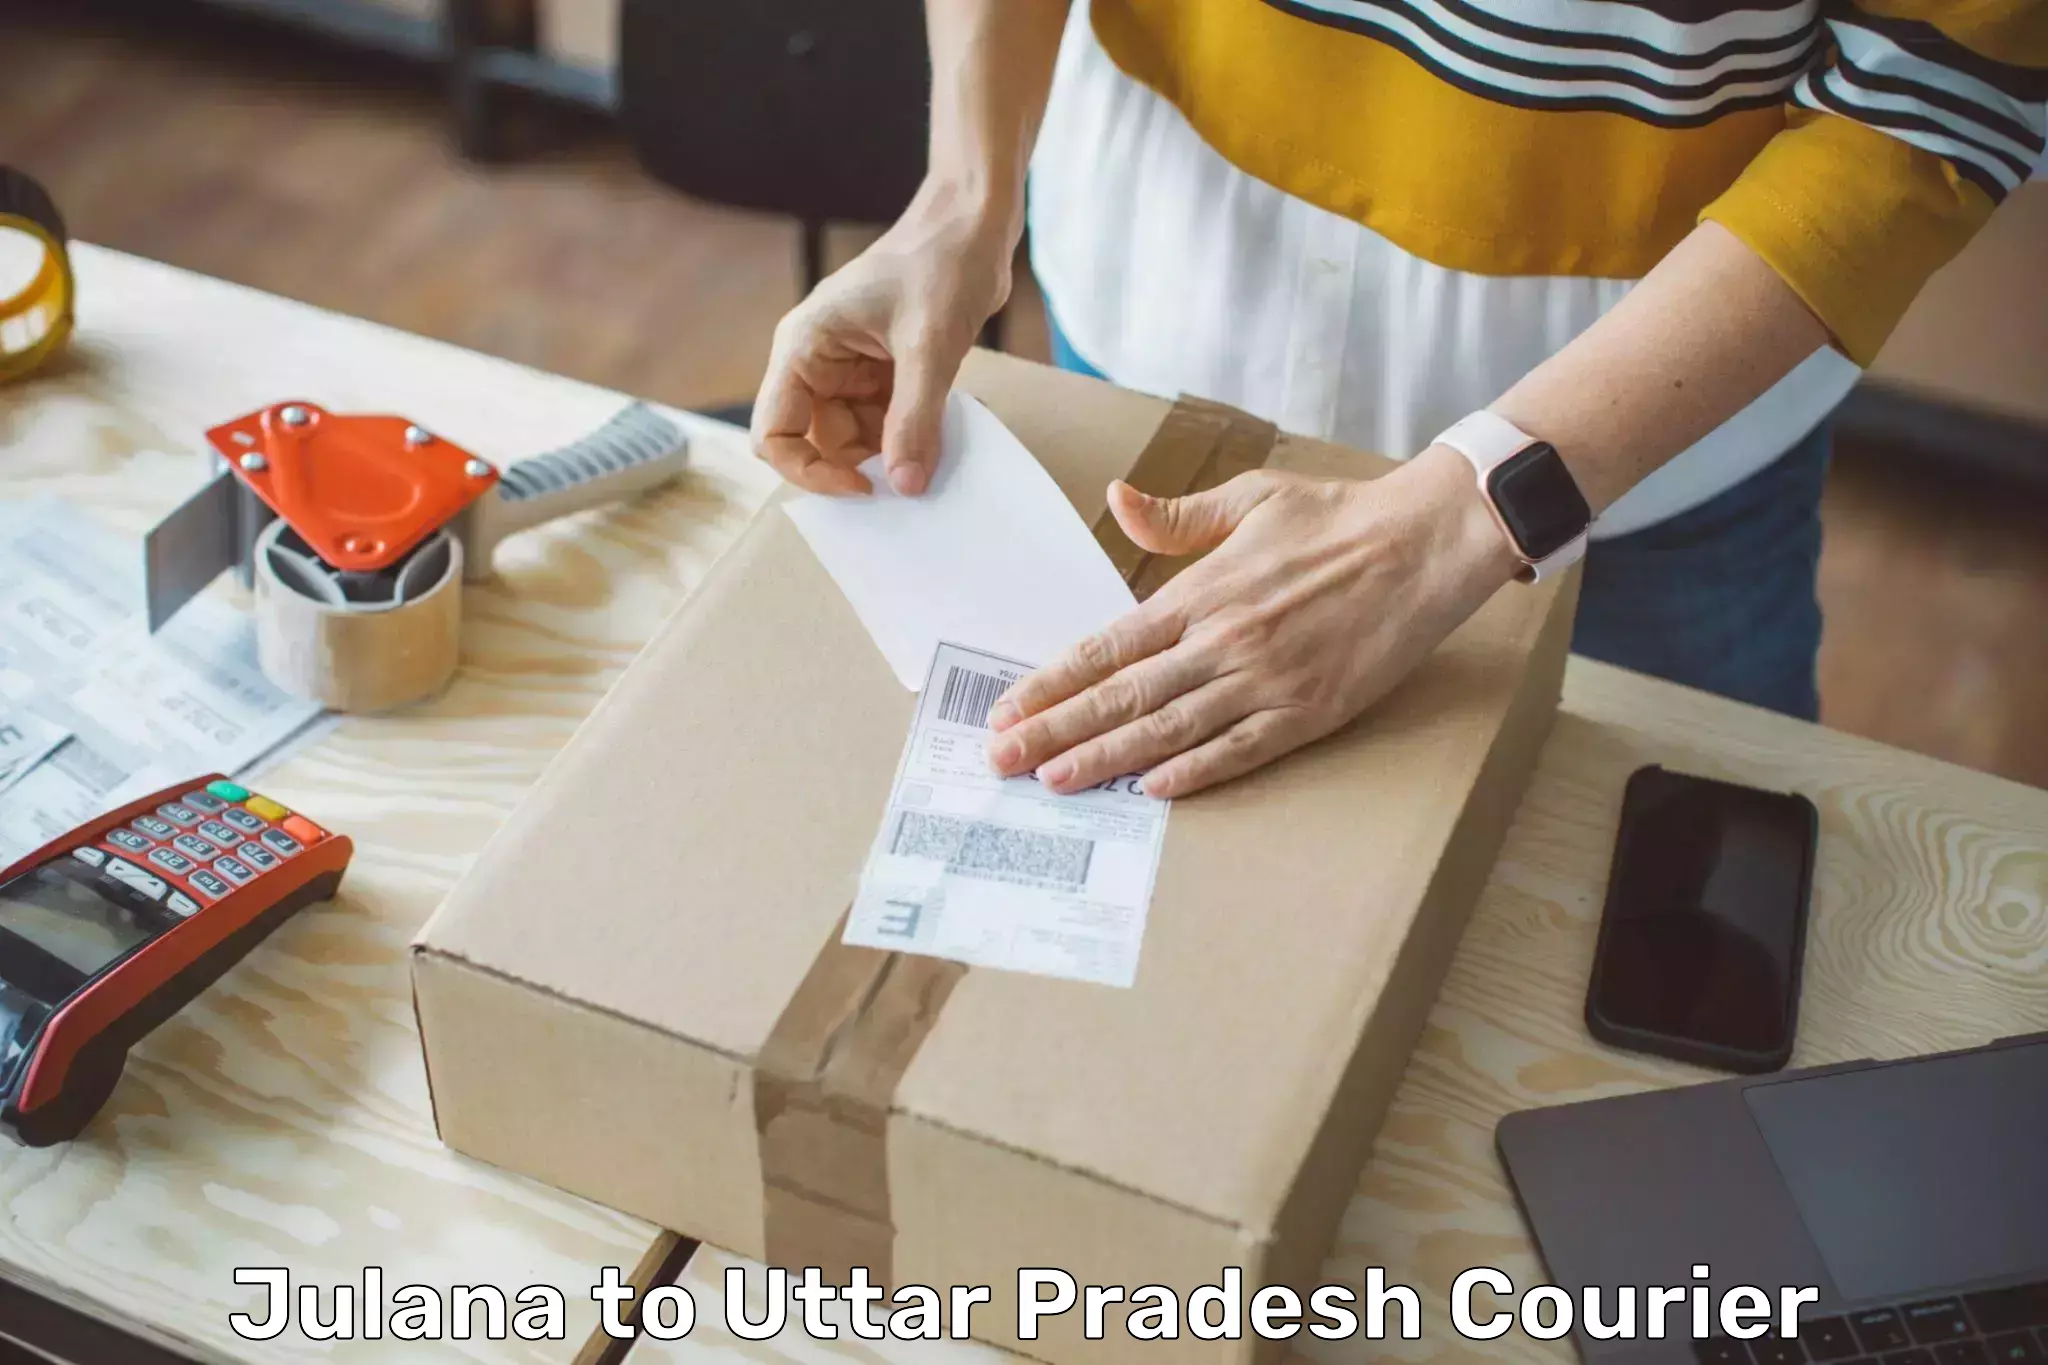 Flexible delivery schedules in Julana to Uttar Pradesh